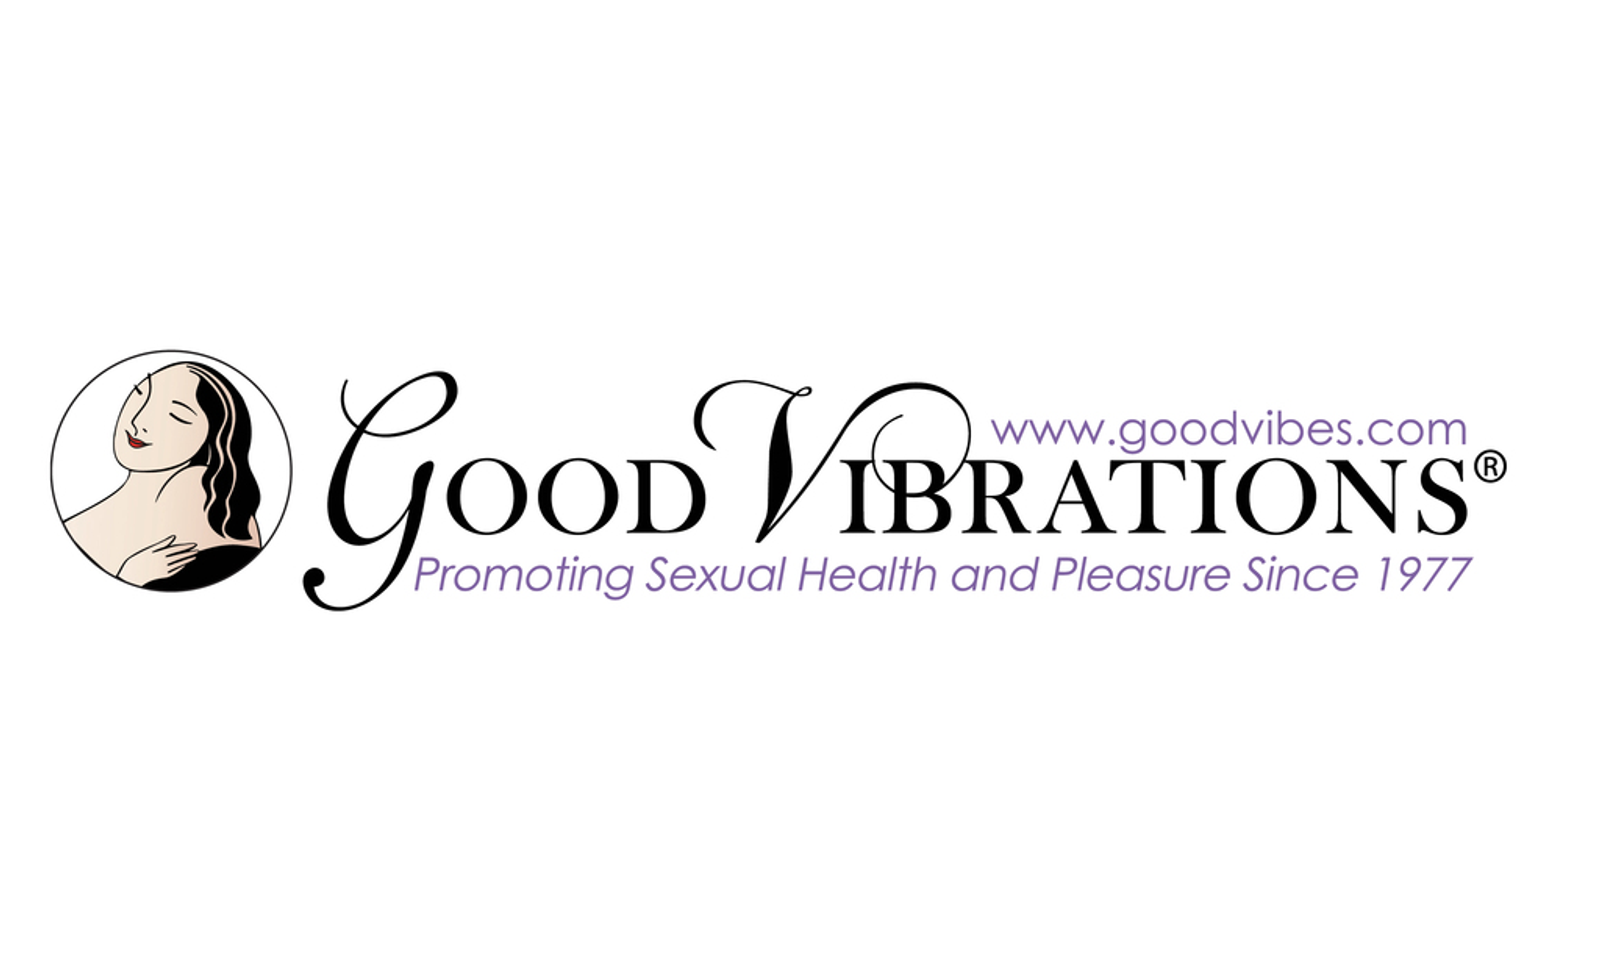 Good Vibrations’ GiVe Program Raises More Than $28K to Feed Needy